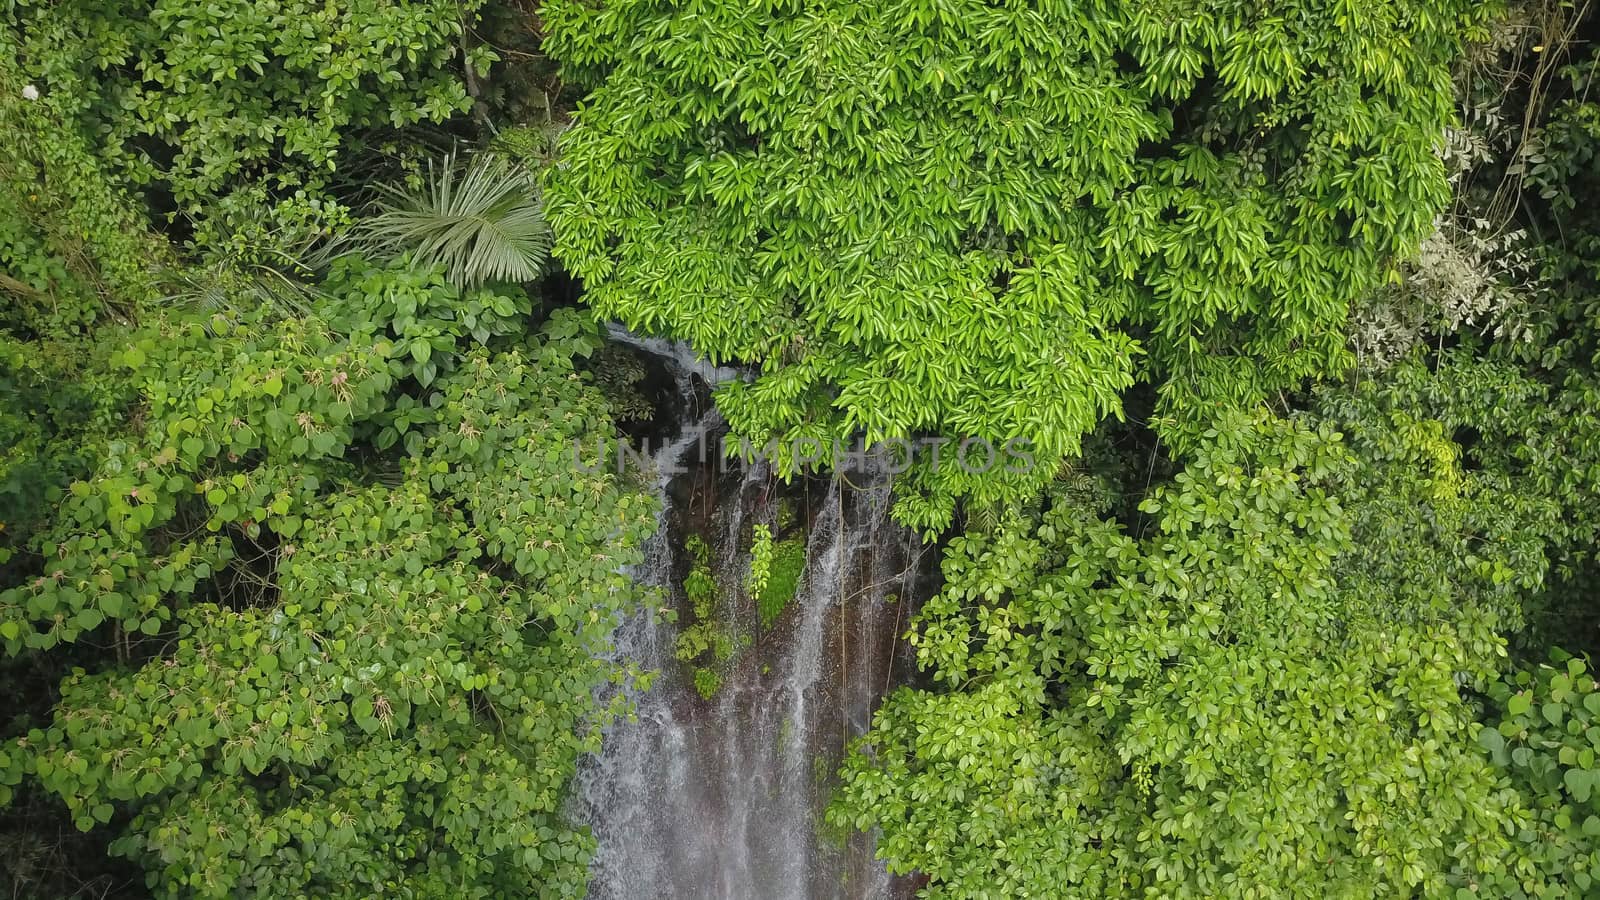 Drone View of Labuhan Kebo Waterfall located in Munduk, Bali.